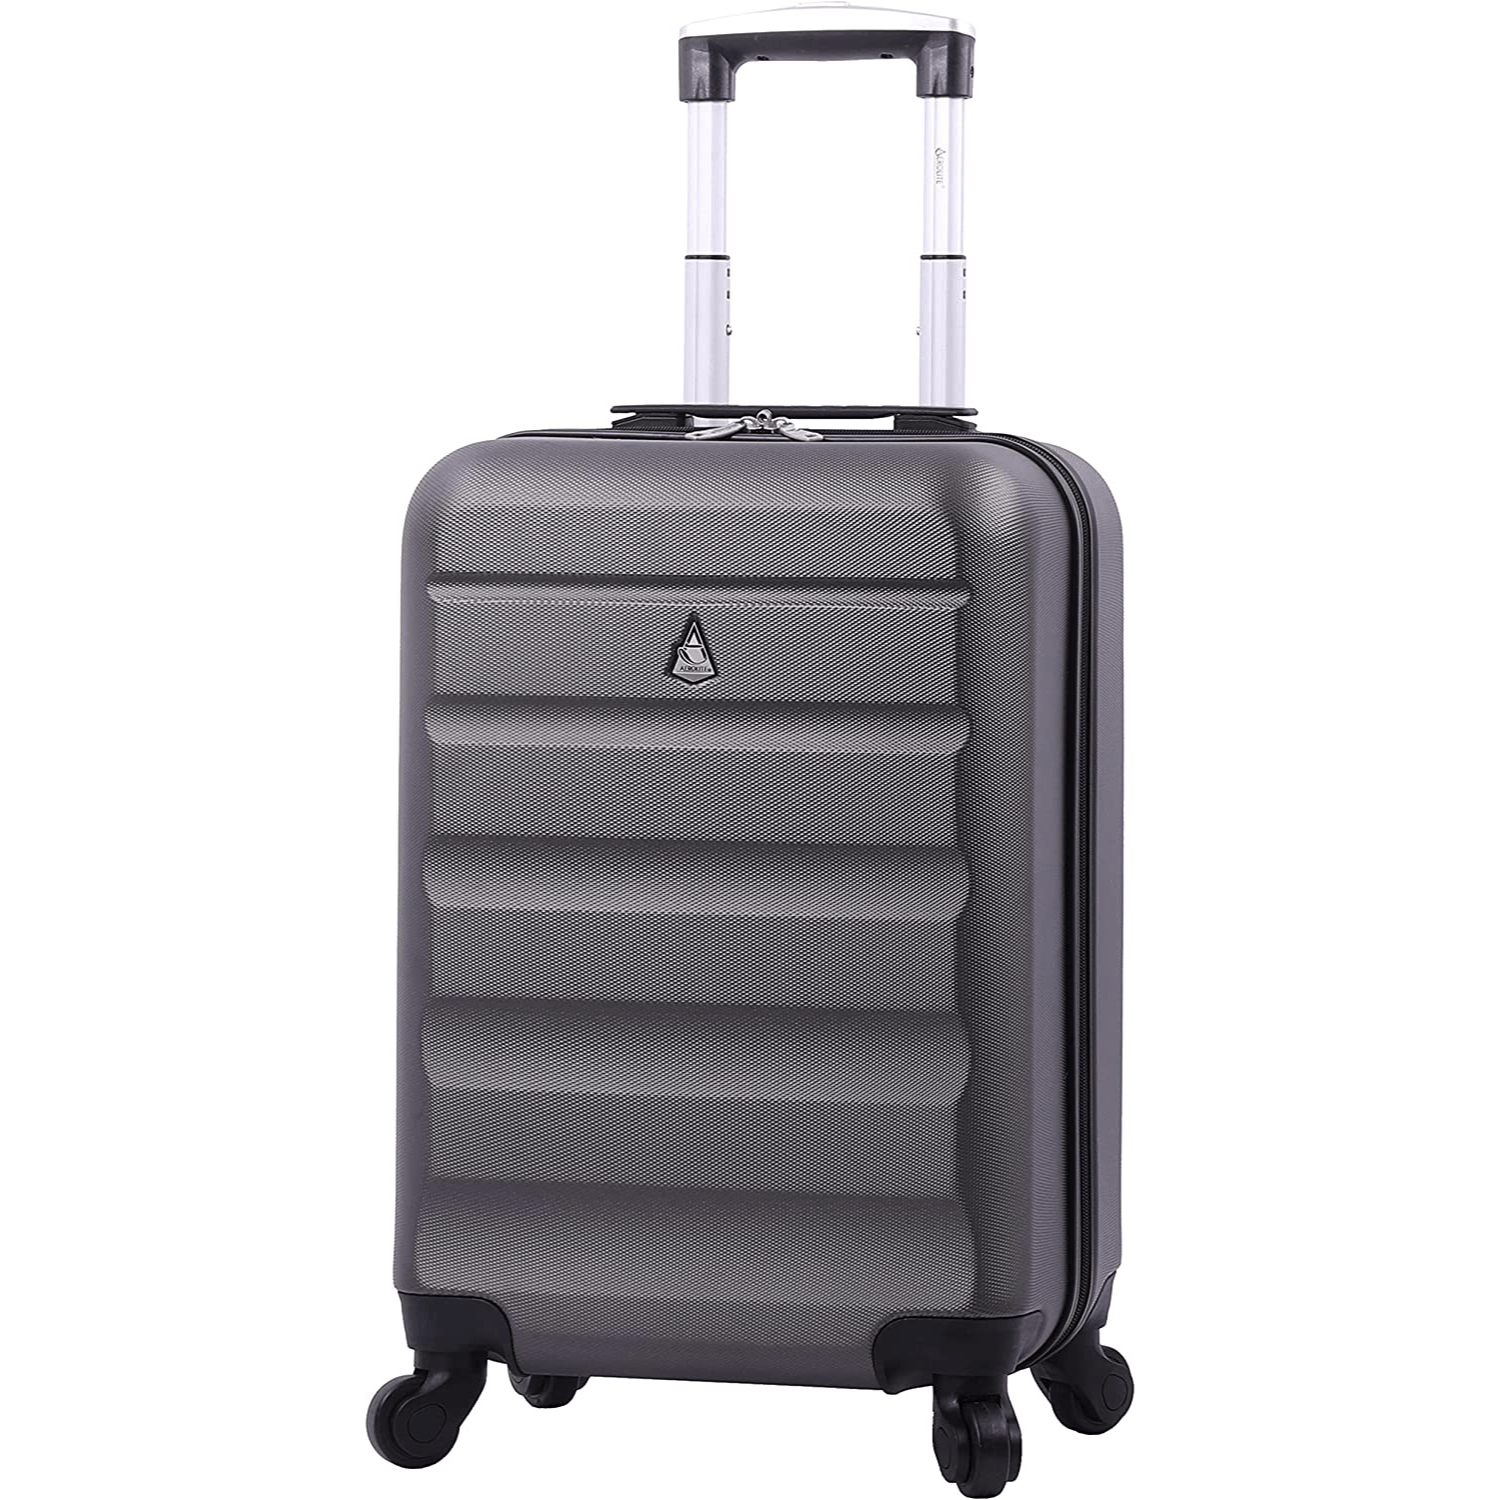 Aerolite (55x35x25cm) Hard Shell Carry On Hand Cabin Luggage Suitcase with 4 Wheels, Max Size for Air Europa, Air France, Alitalia, KLM & Transavia - Aerolite UK